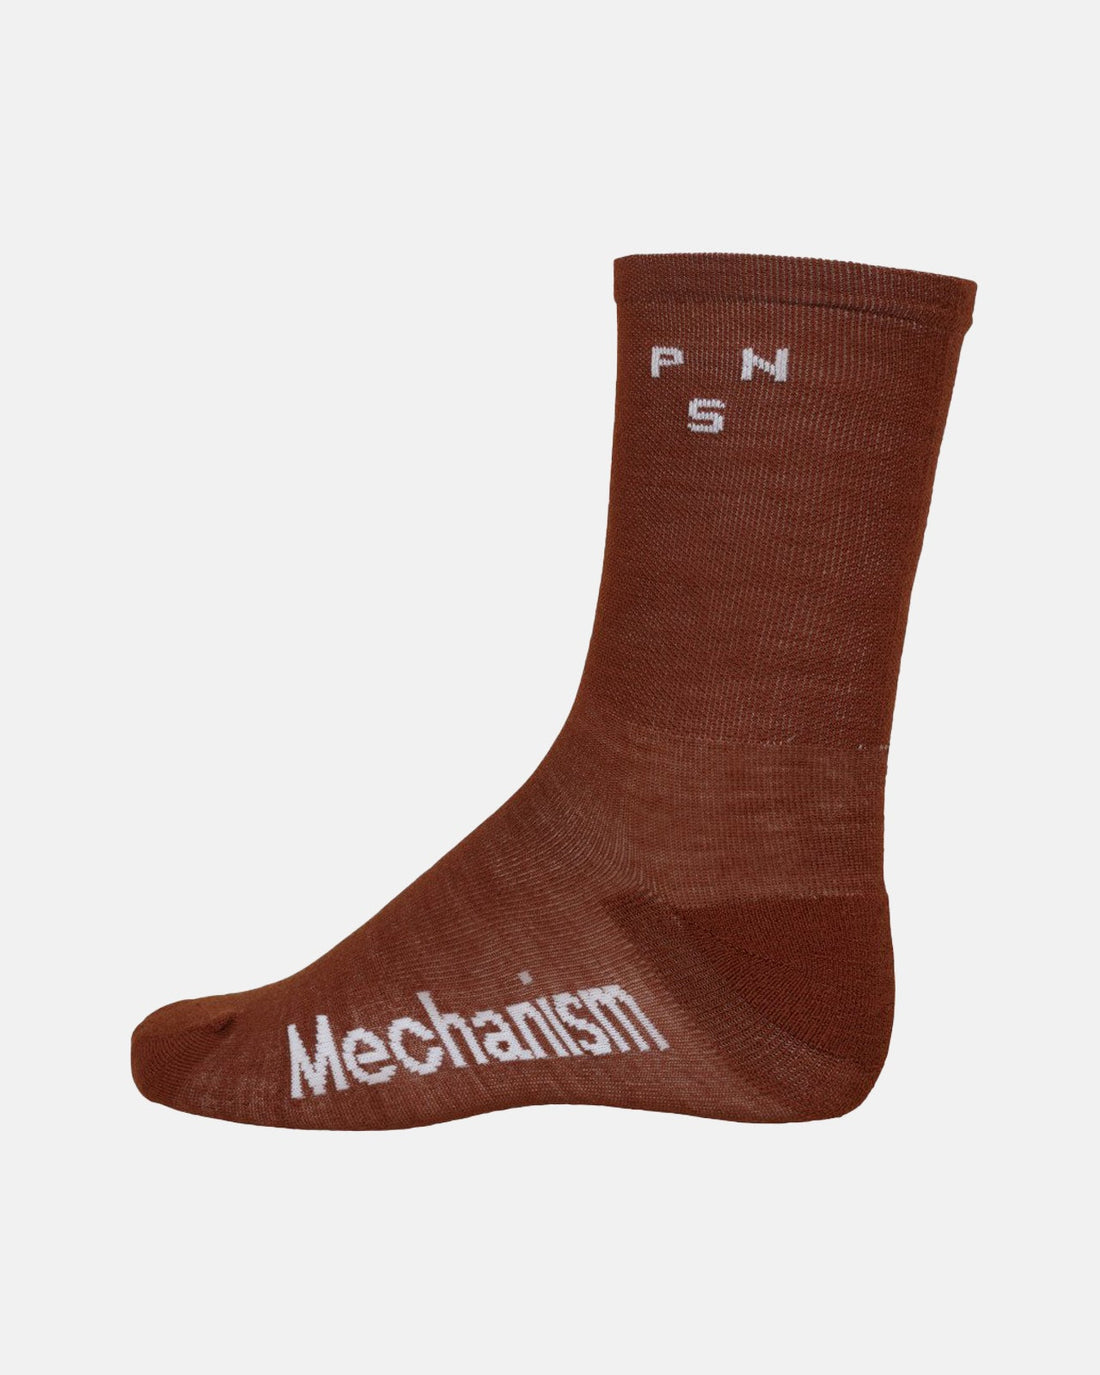 Mechanism Thermal Socks - Hazel